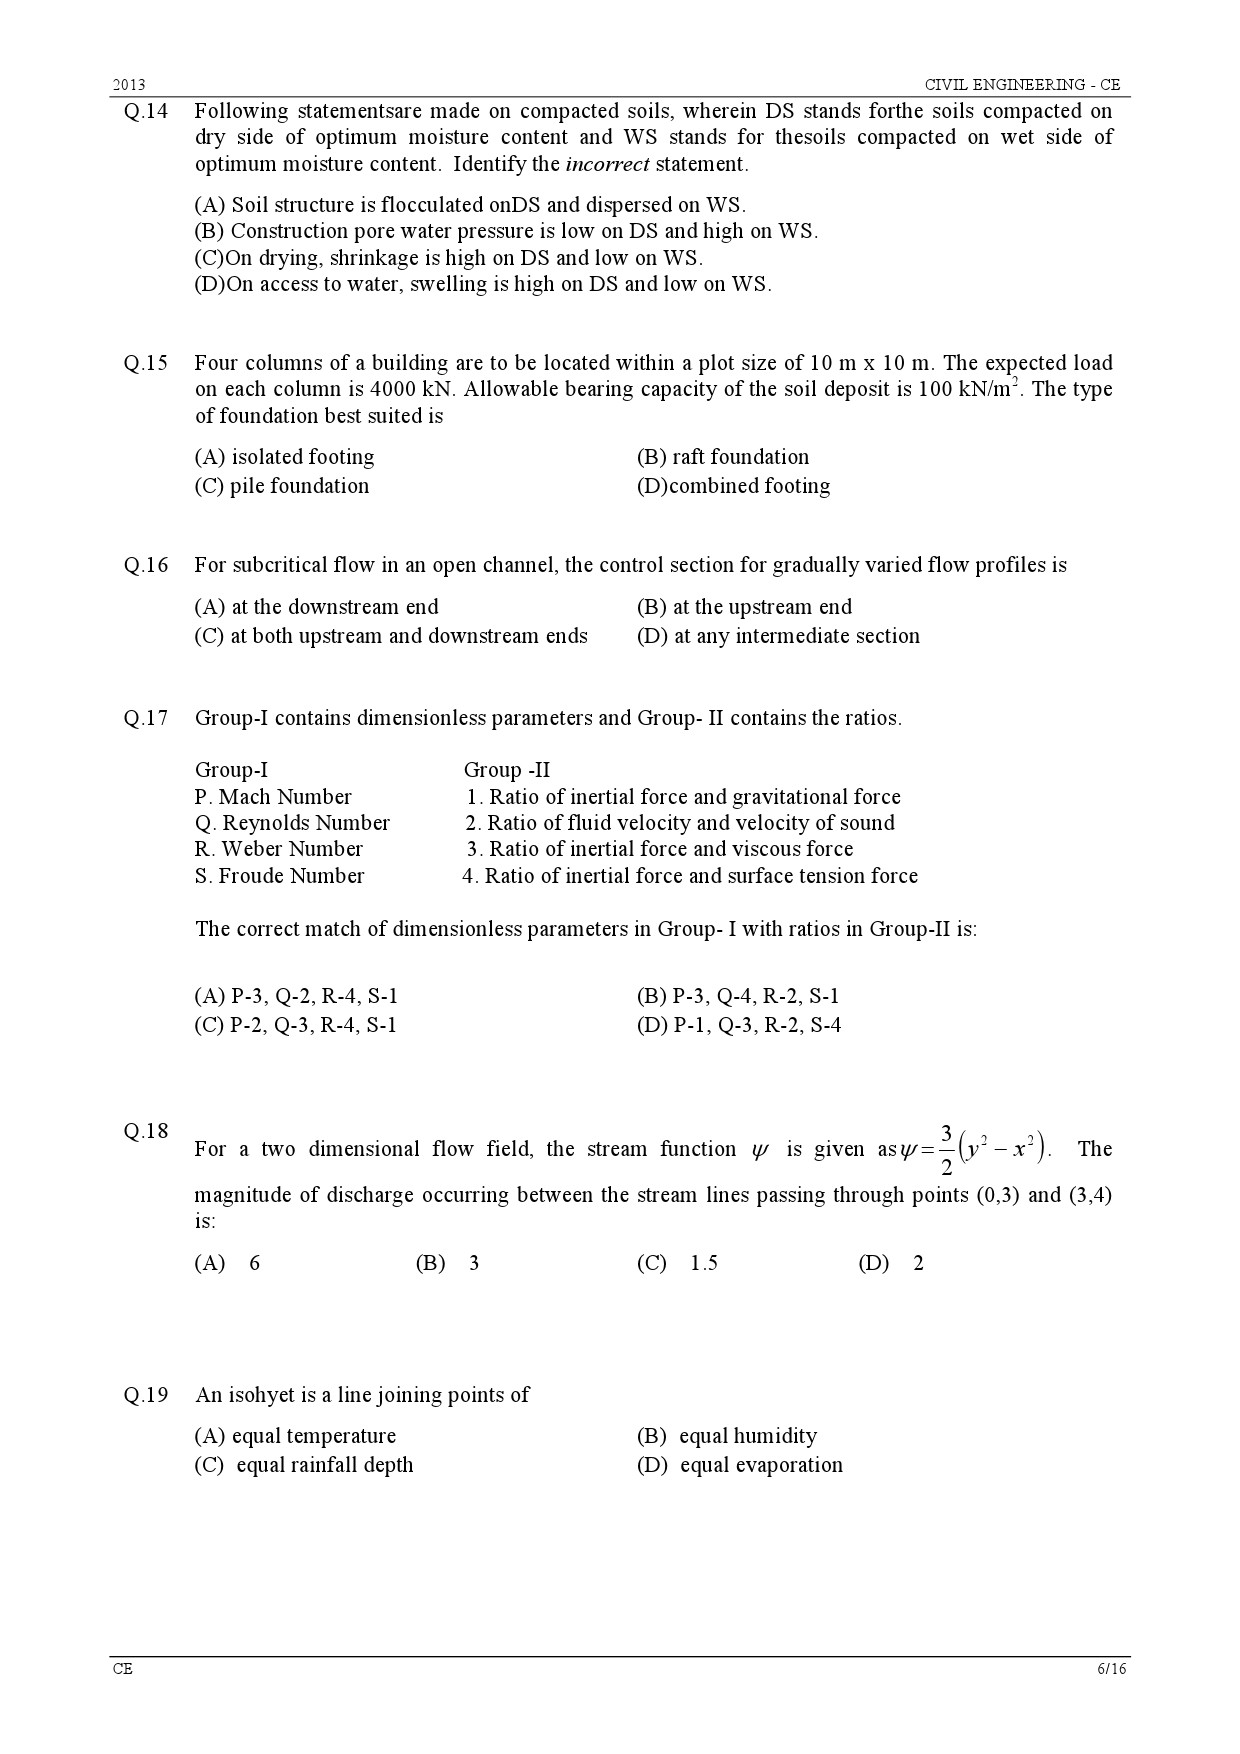 GATE Exam Question Paper 2013 Civil Engineering 6